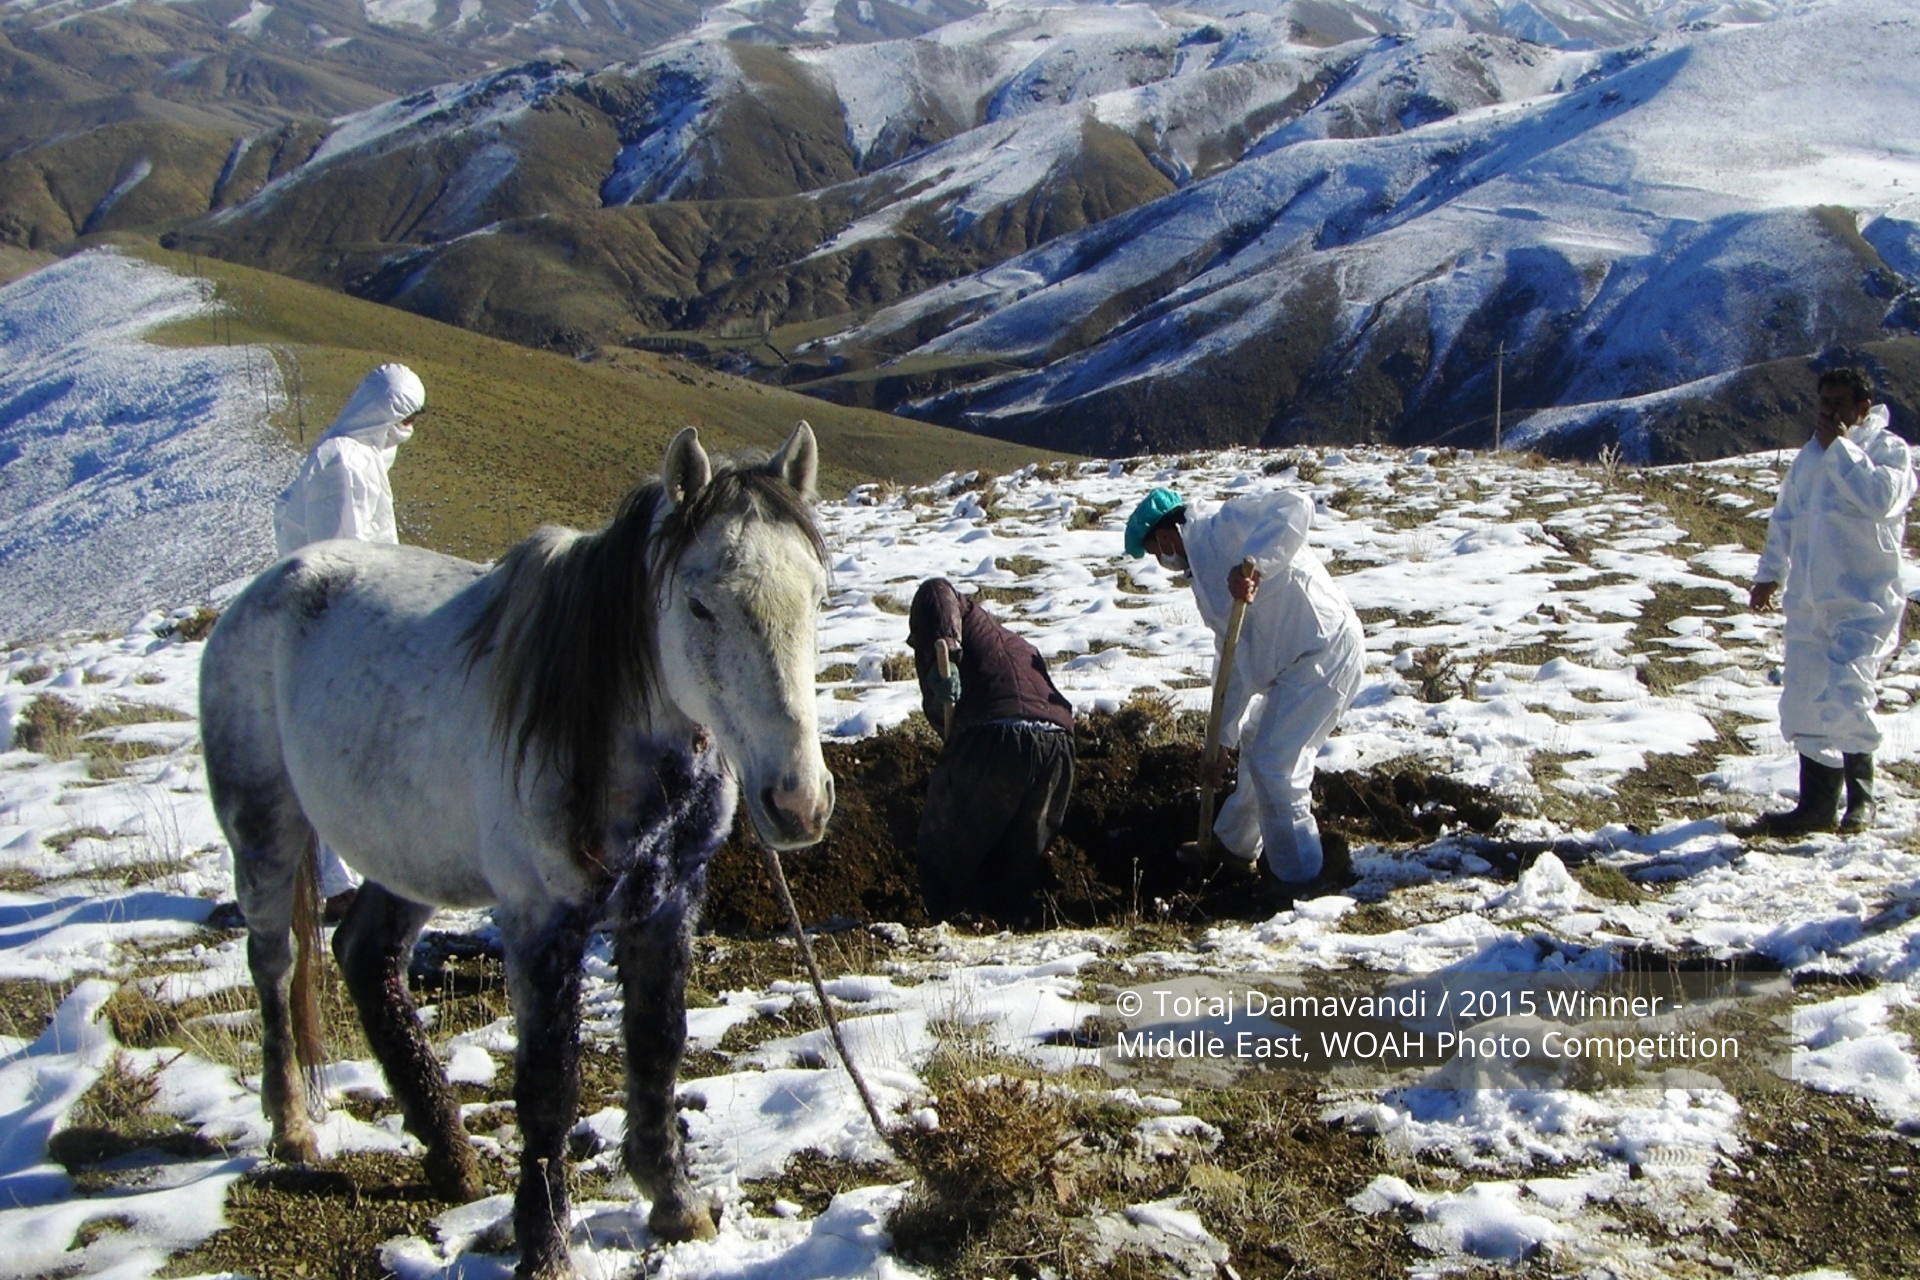 Photo caption: Destruction of horse with glanders Photographer: Dr Toraj Damavandi